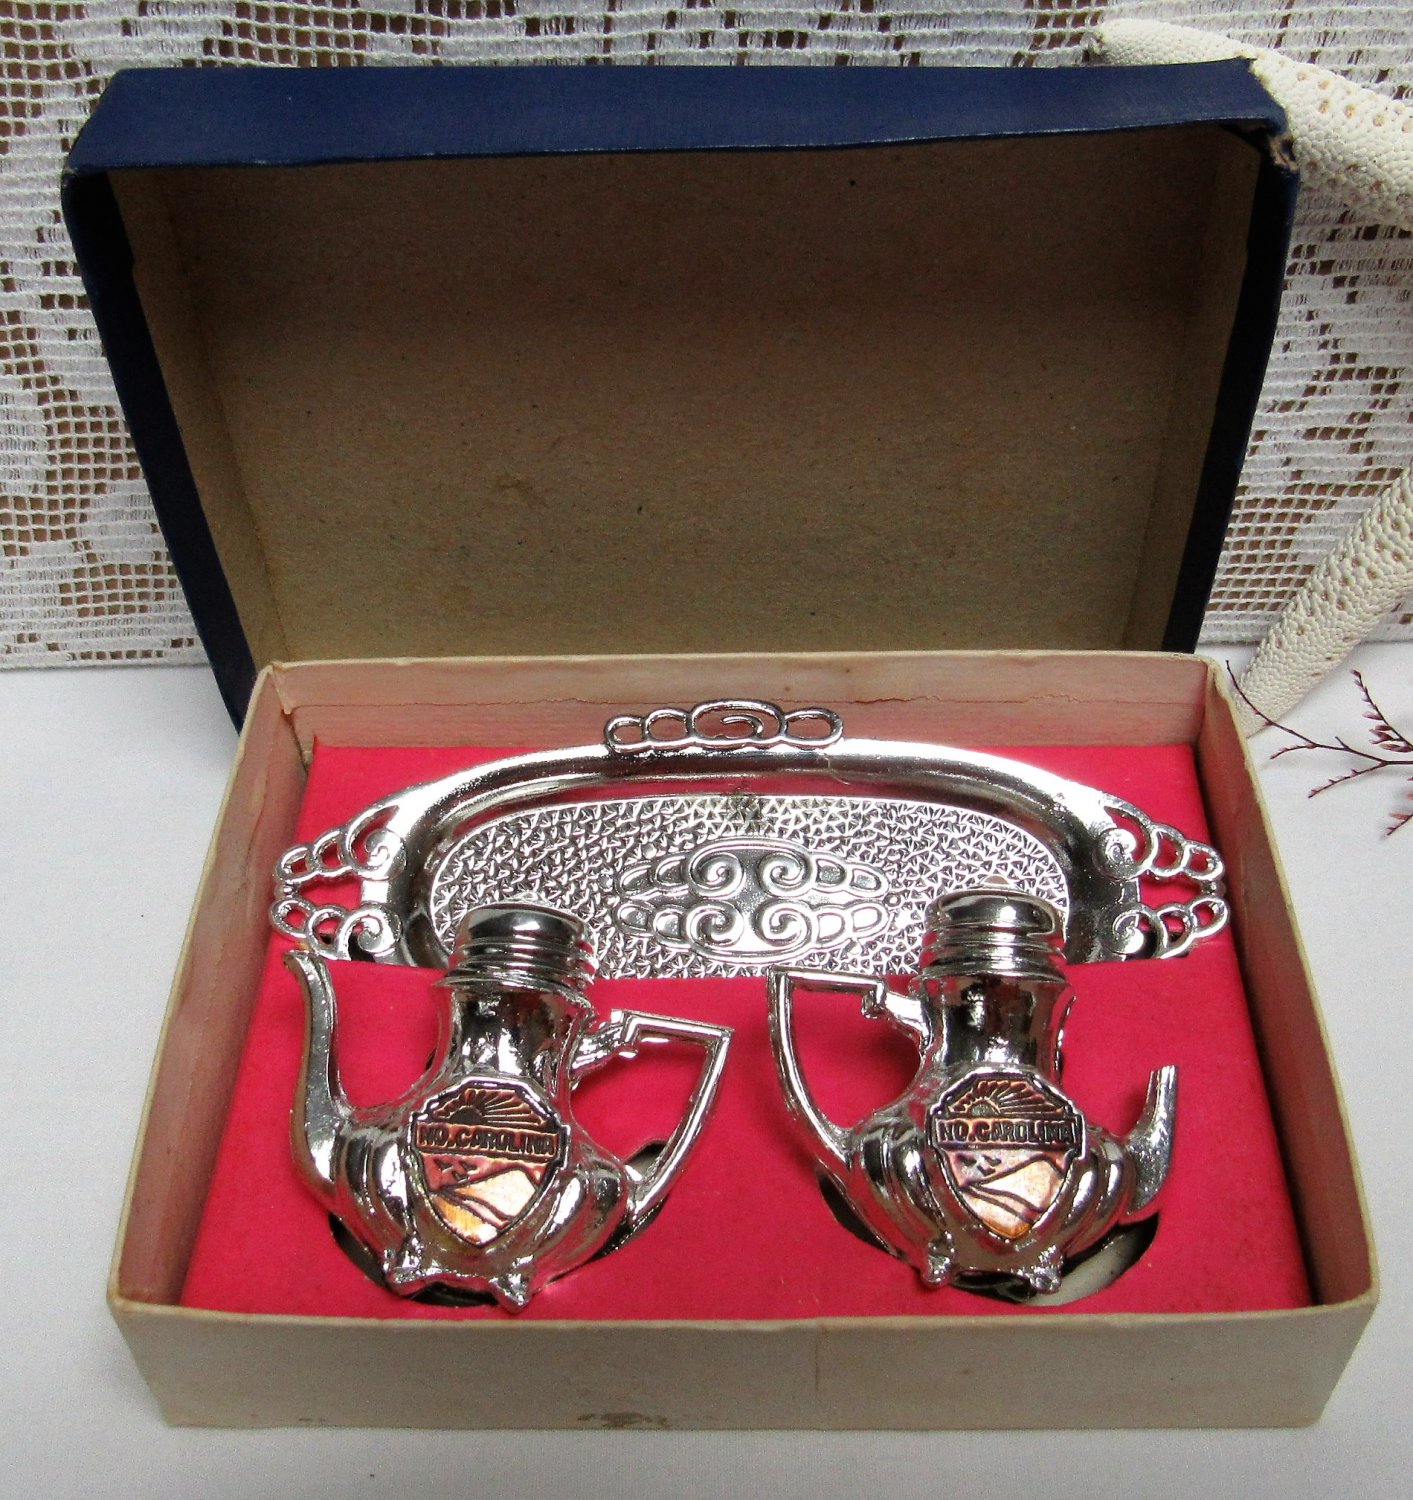 Vintage BOHEMIA GLASS CRYSTAL Bowl CZECH REPUBLIC Gold Rim Clear ORIG.  STICKER